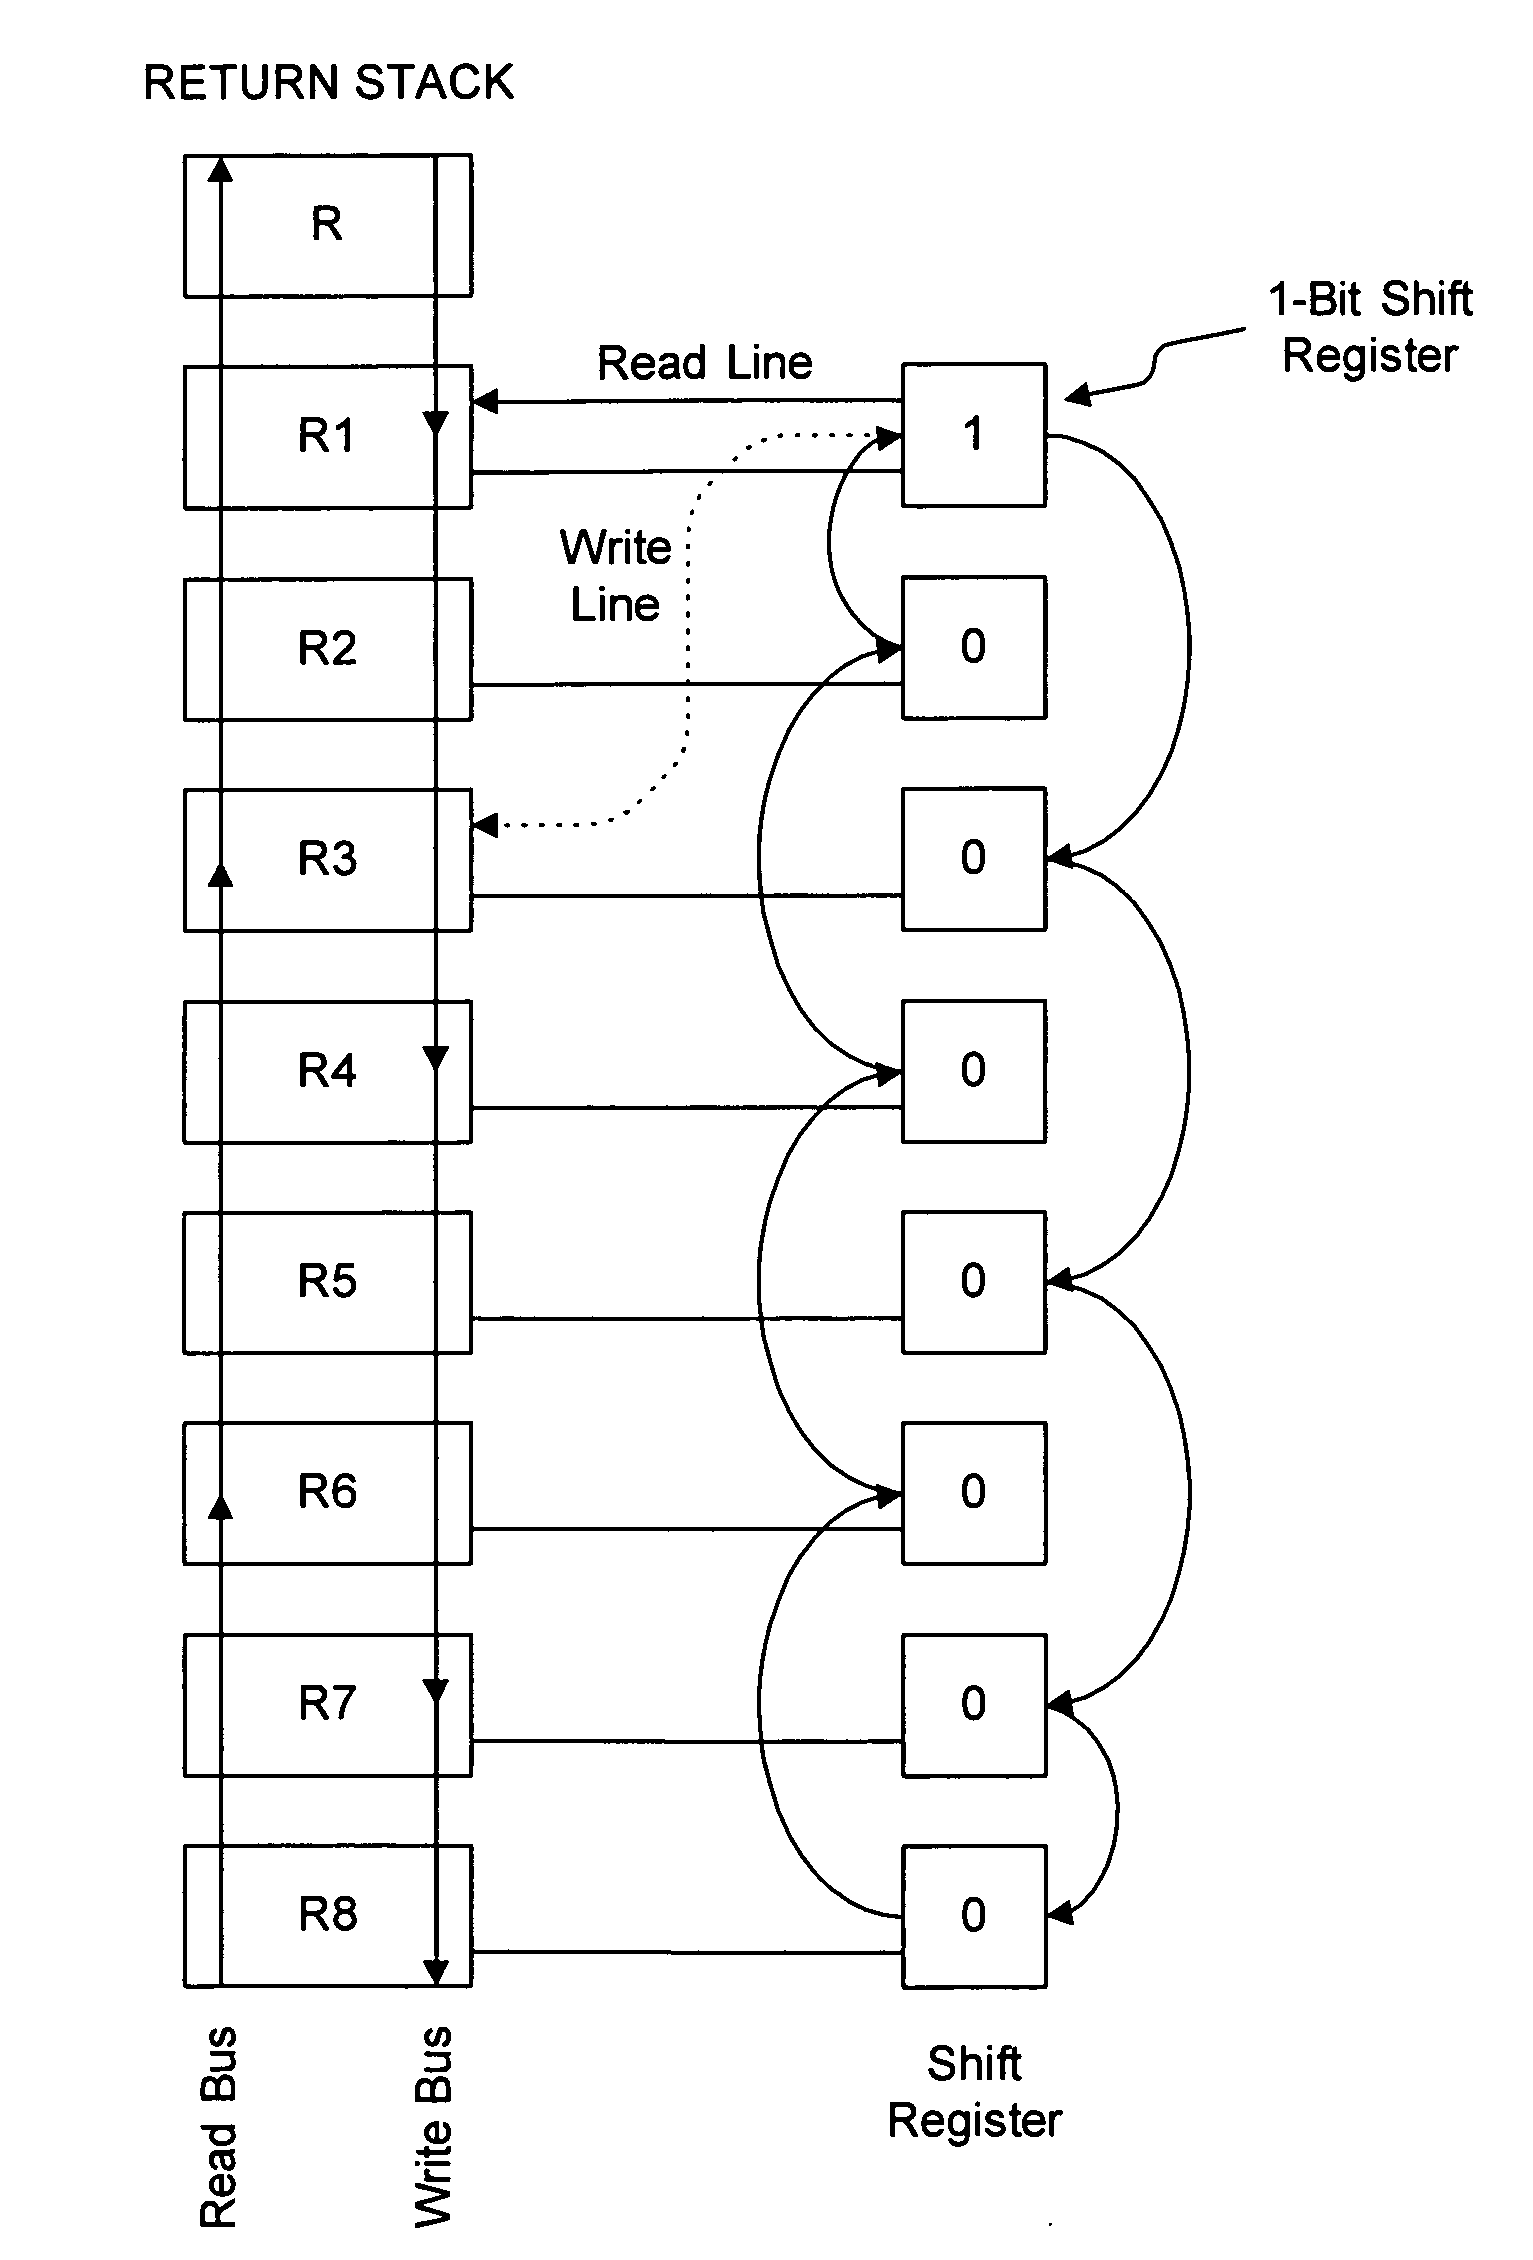 Circular register arrays of a computer